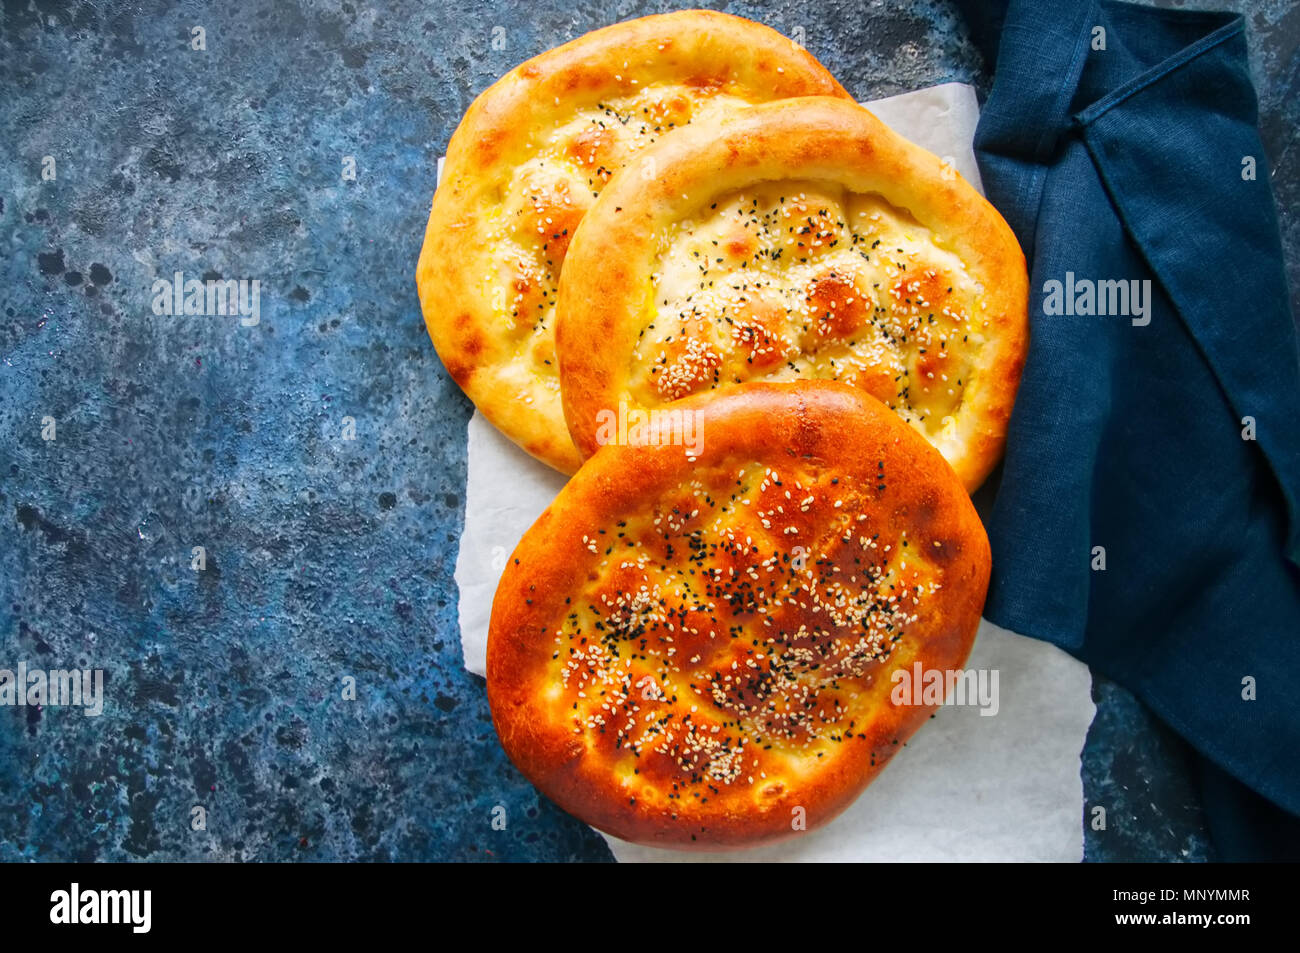 Turkish ramazan pidesi - Traditional Turkish ramadan flatbreads usually baked during ramadan month. Blue stone background. Top view. Stock Photo